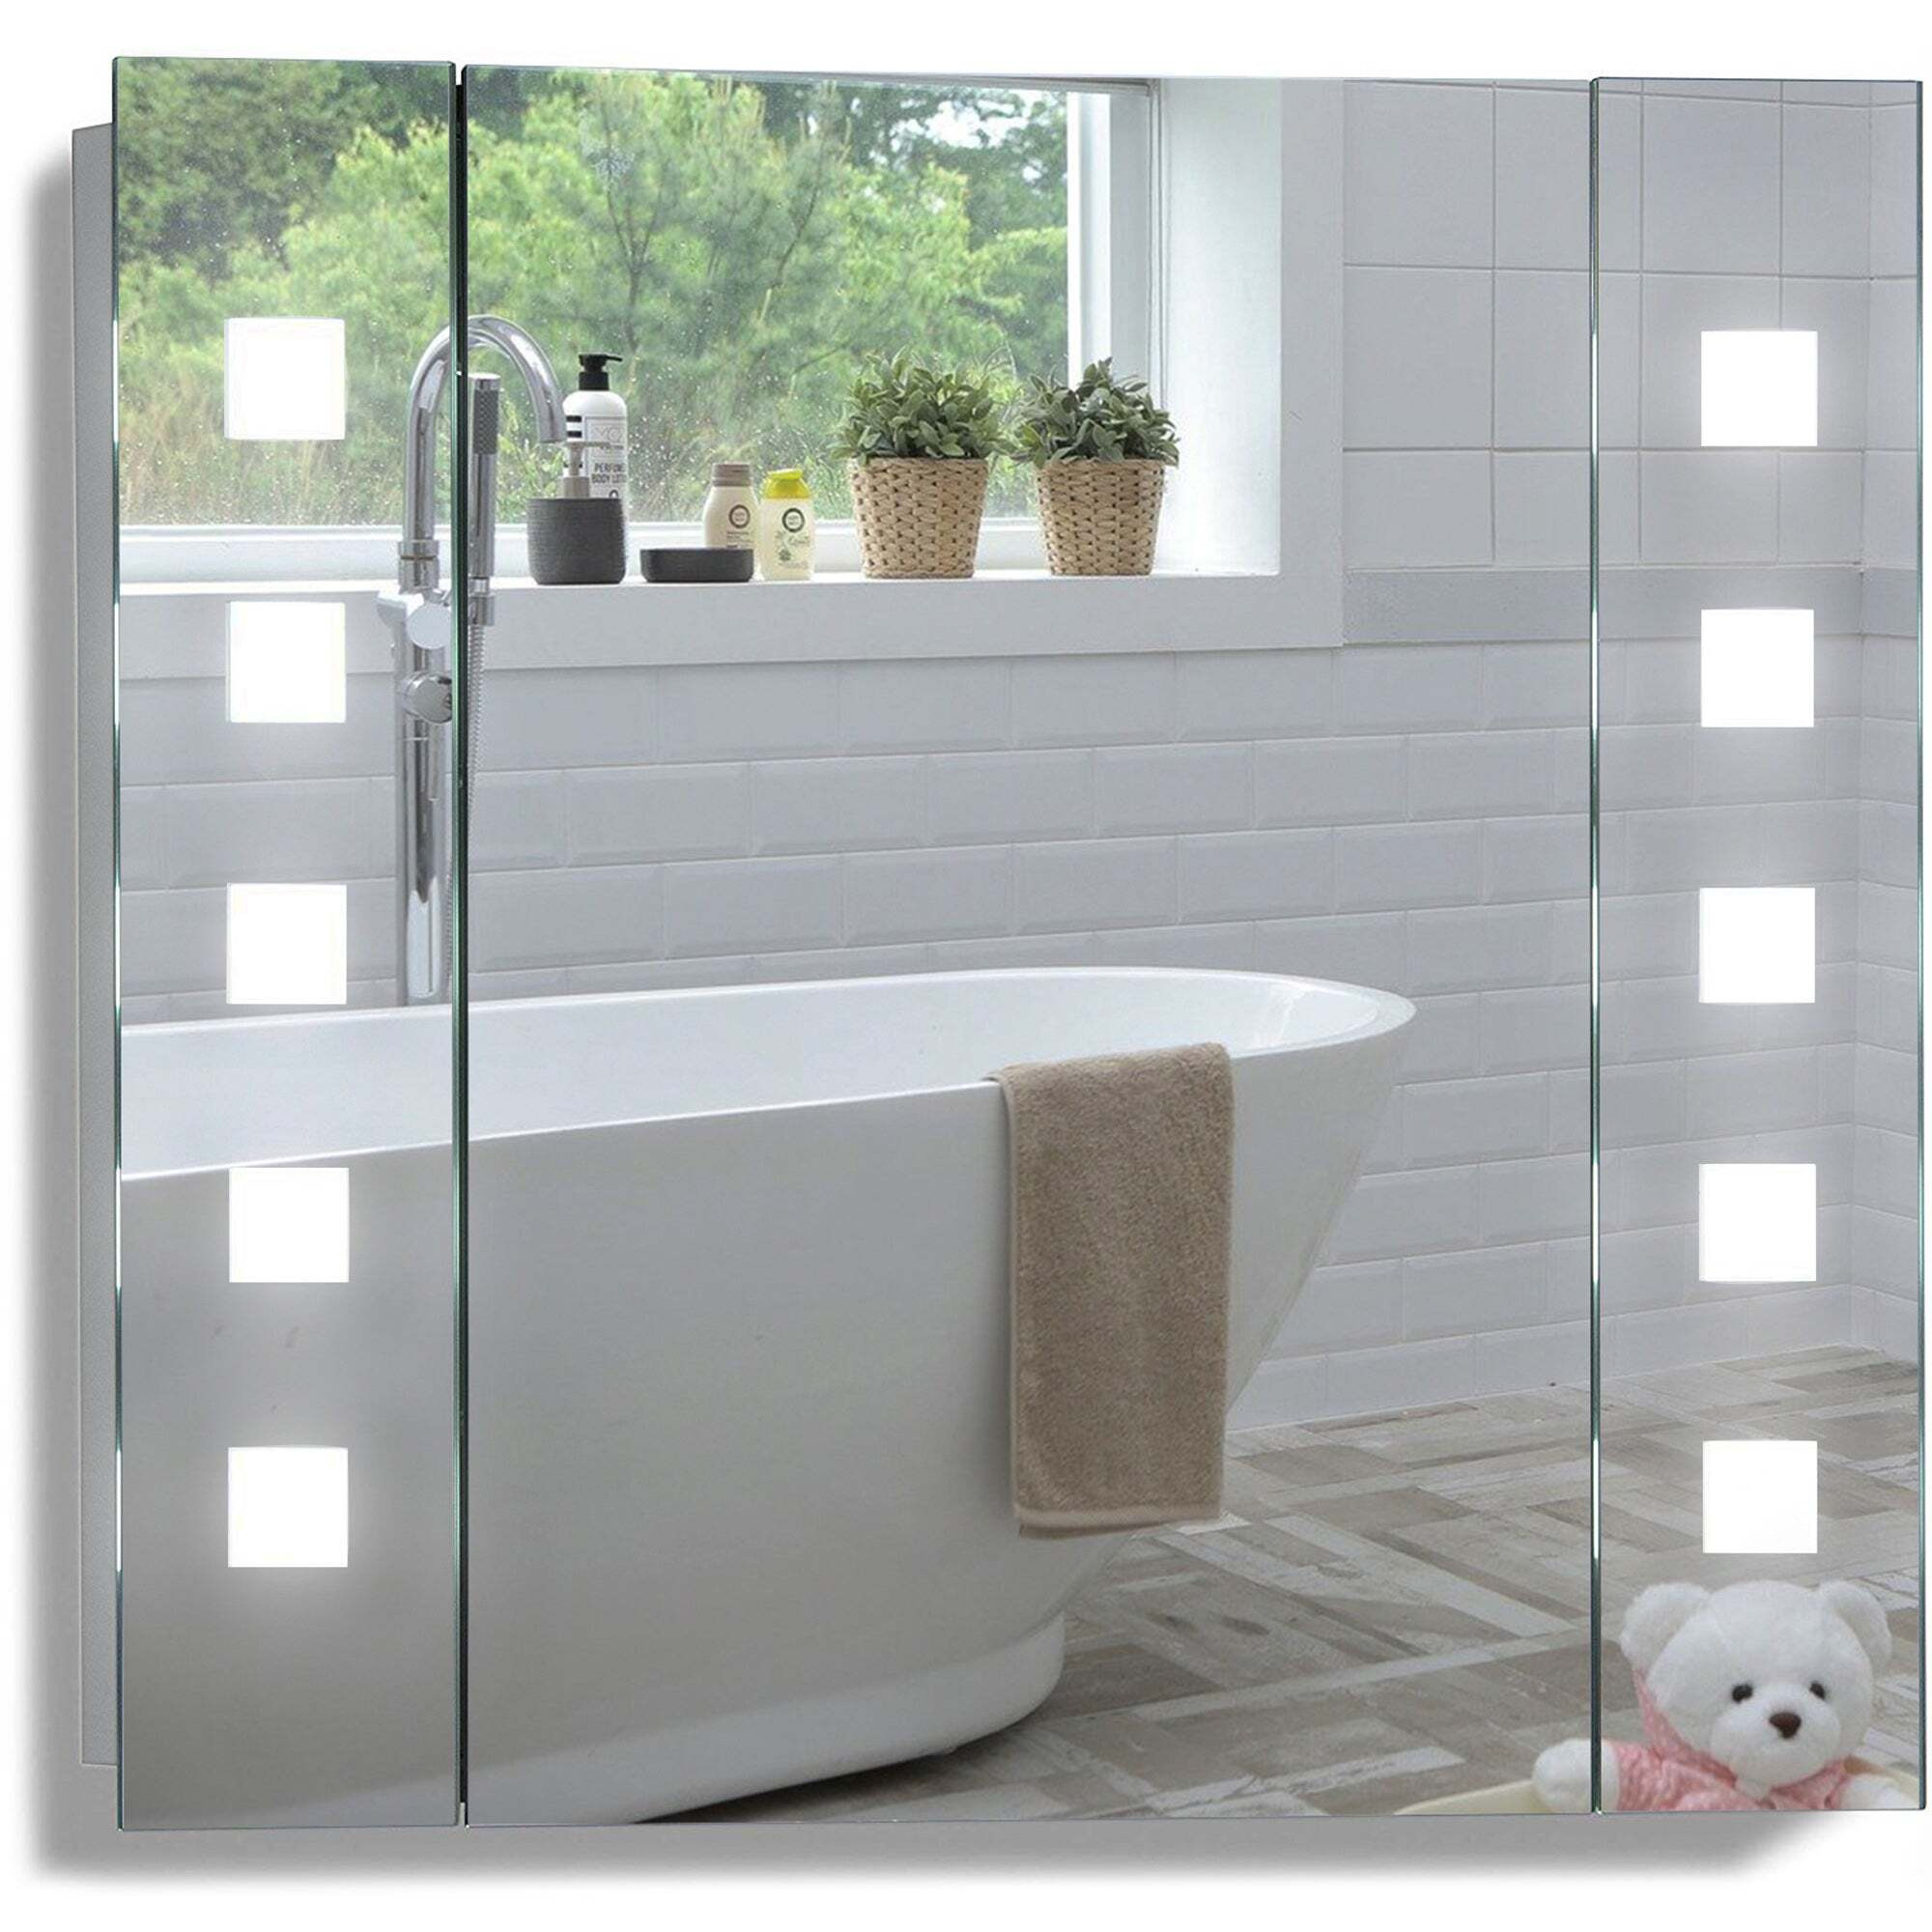 Atom LED Illuminated Bathroom Mirror Cabinet CABM20: Size-60Hx65Wx13.5Dcm